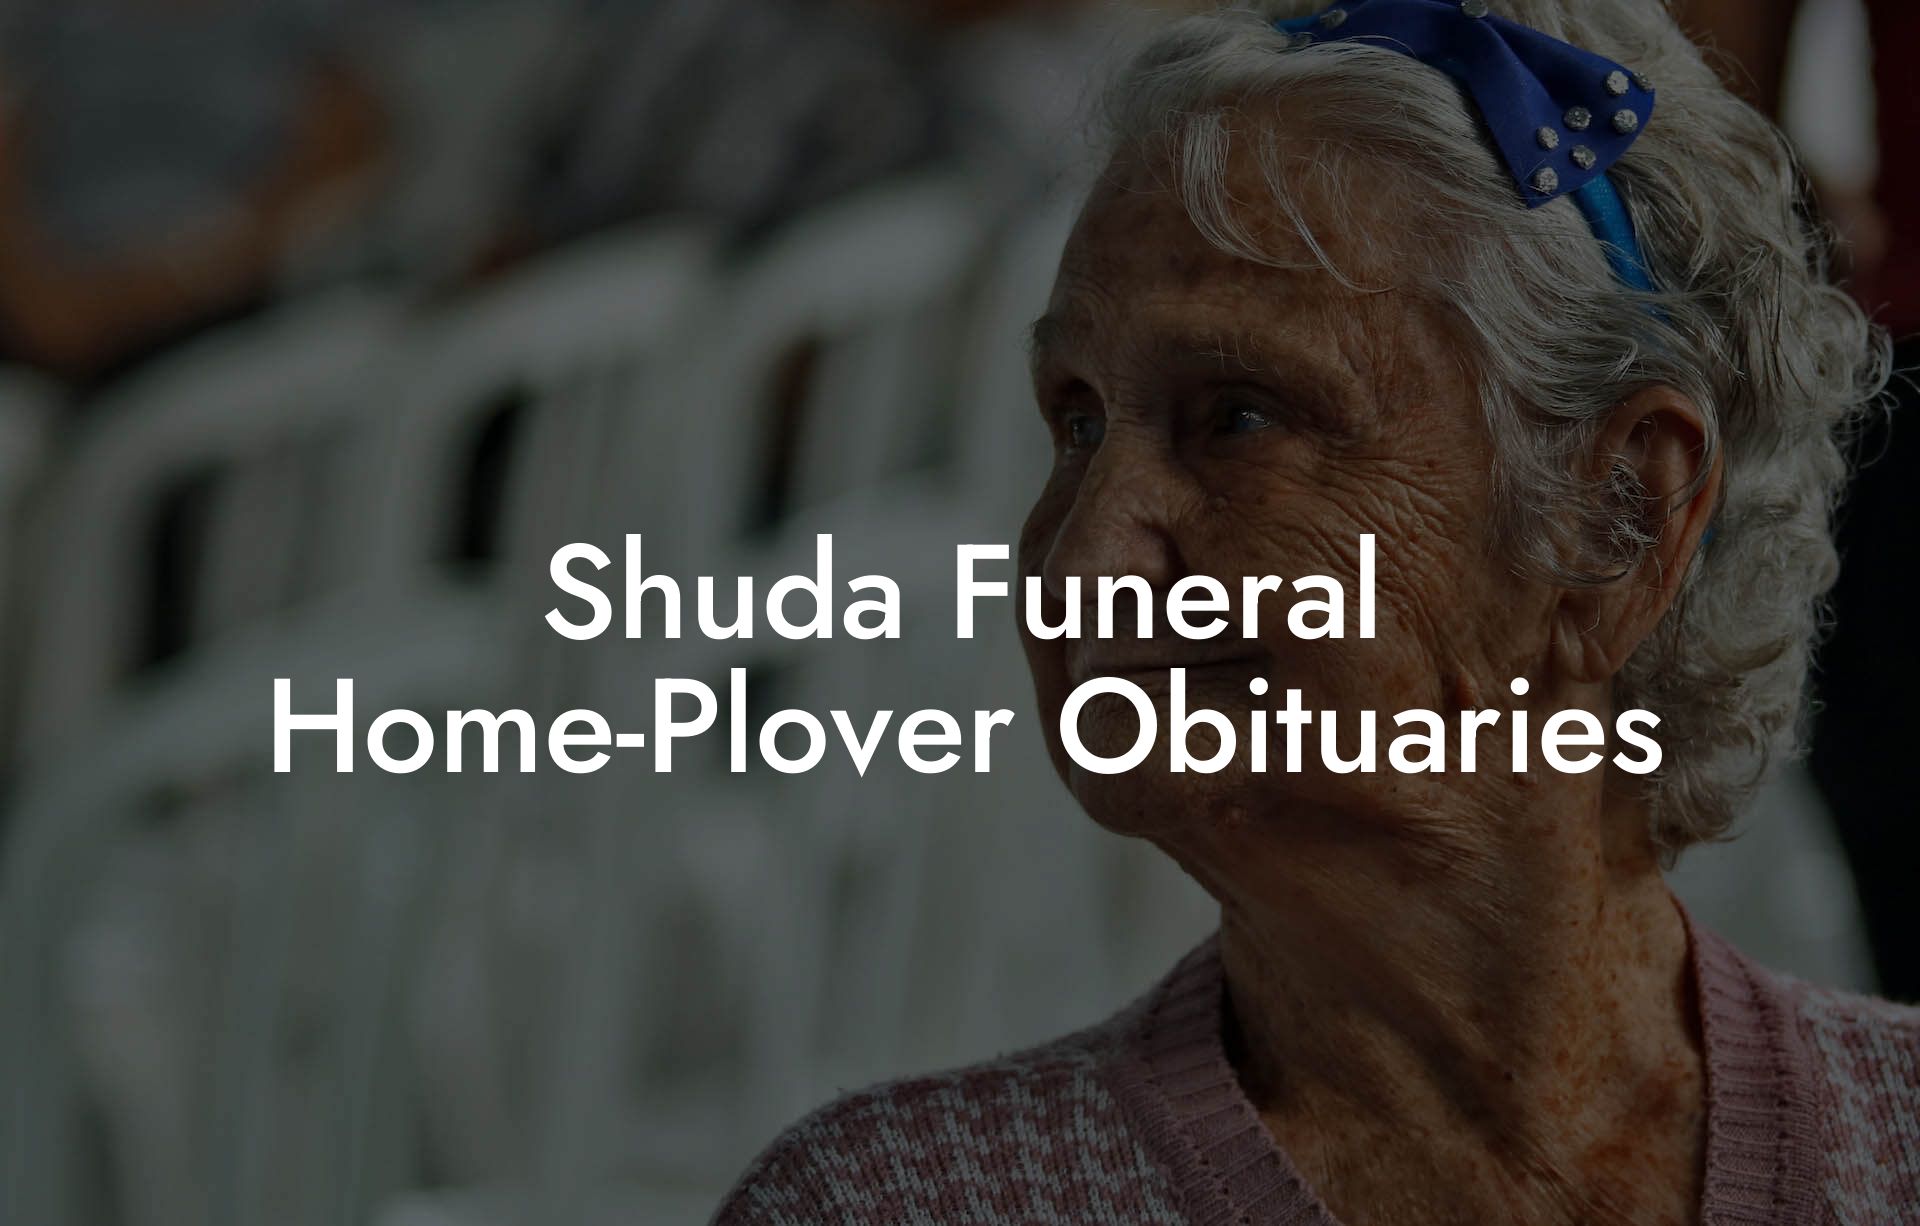 Shuda Funeral Home-Plover Obituaries